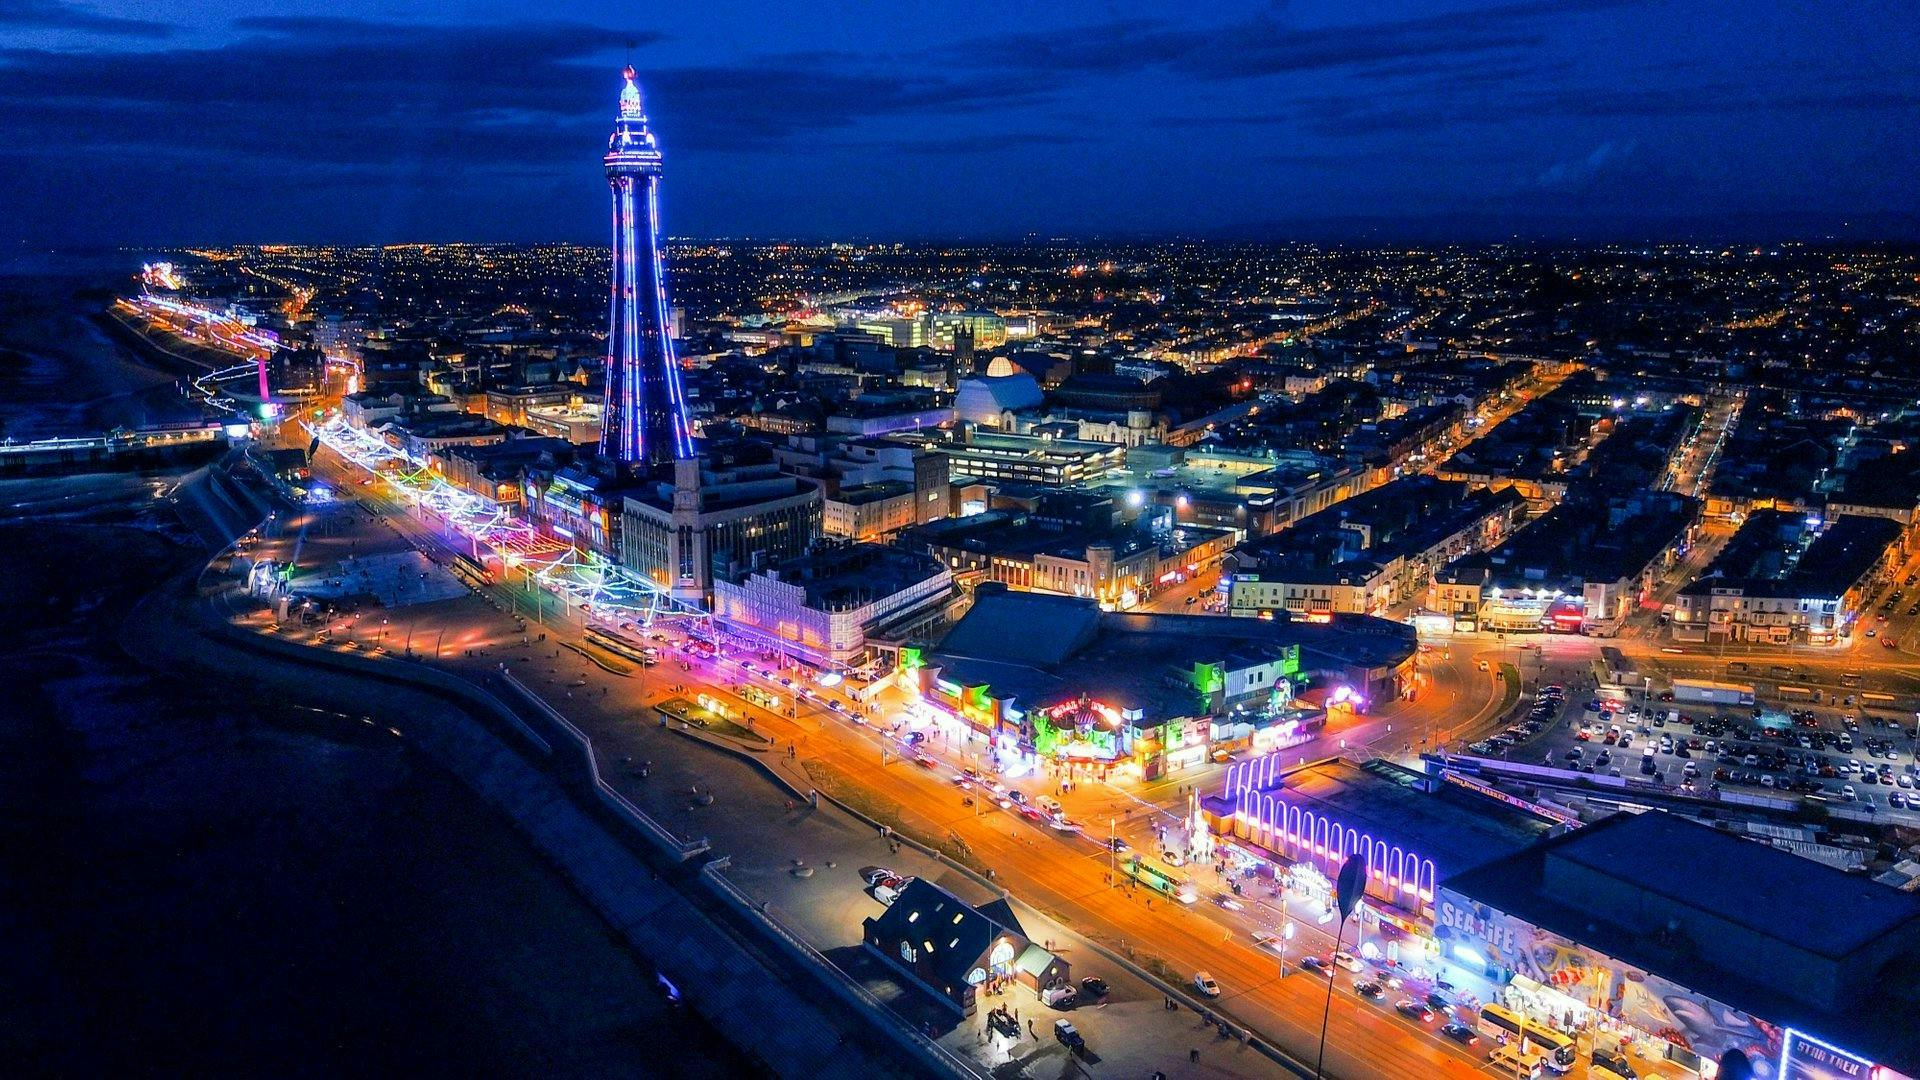 An image of the Blackpool coastline illuminated by lights